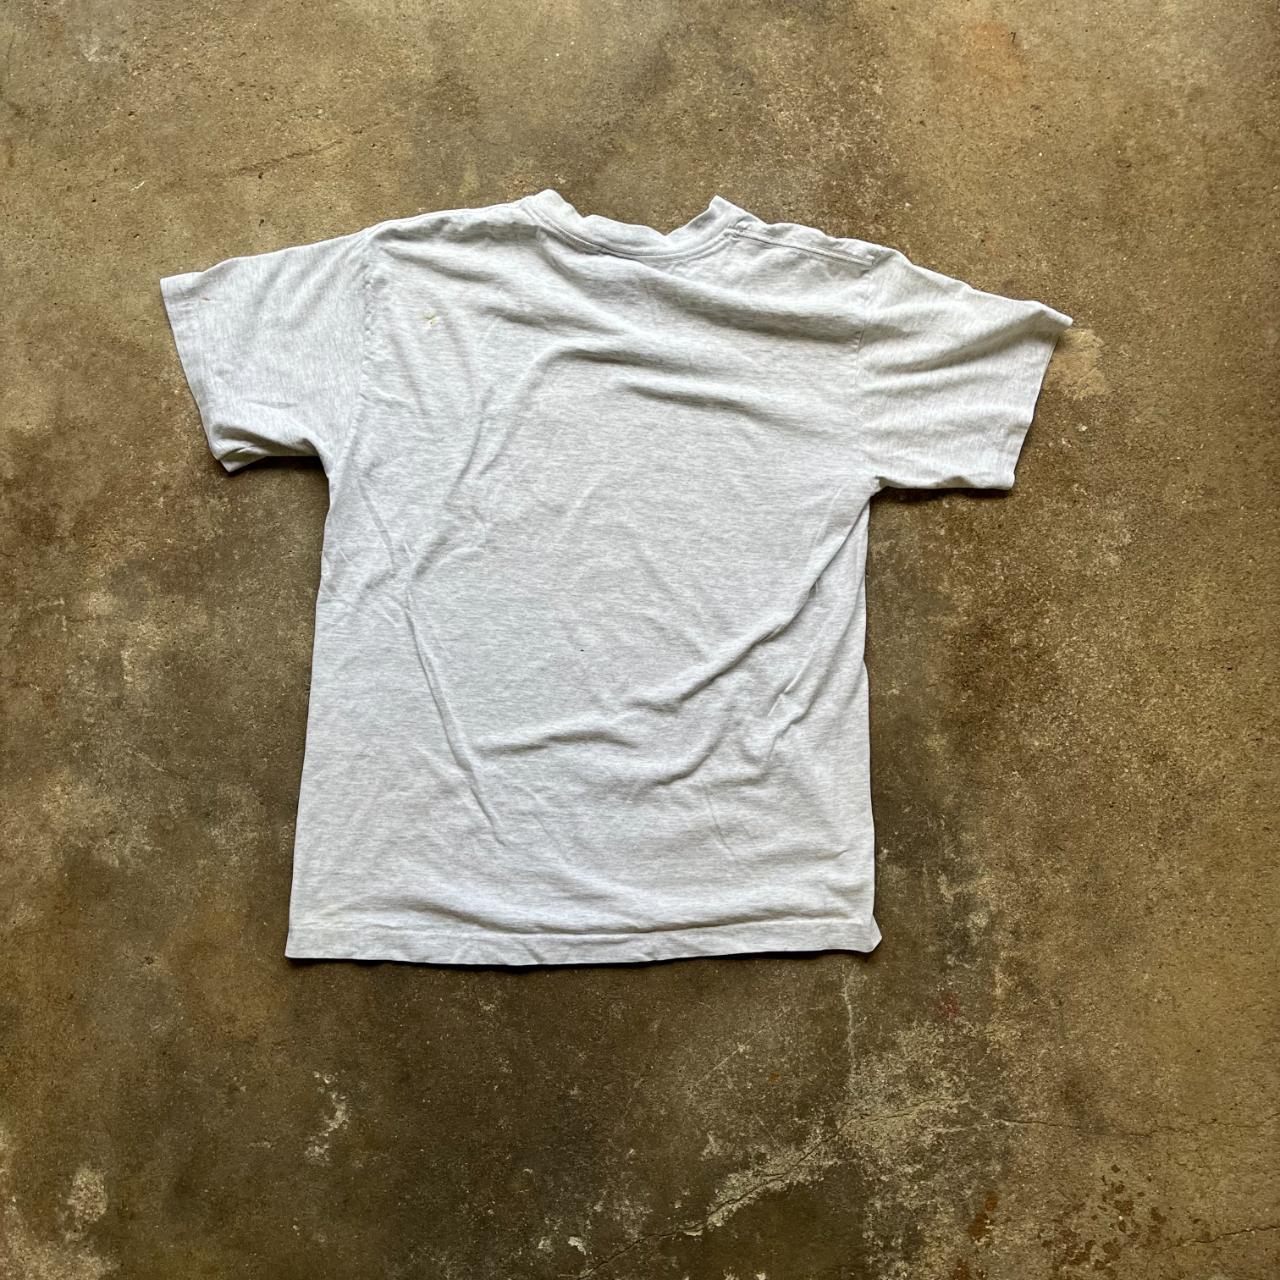 Dickies Men's Grey and White T-shirt